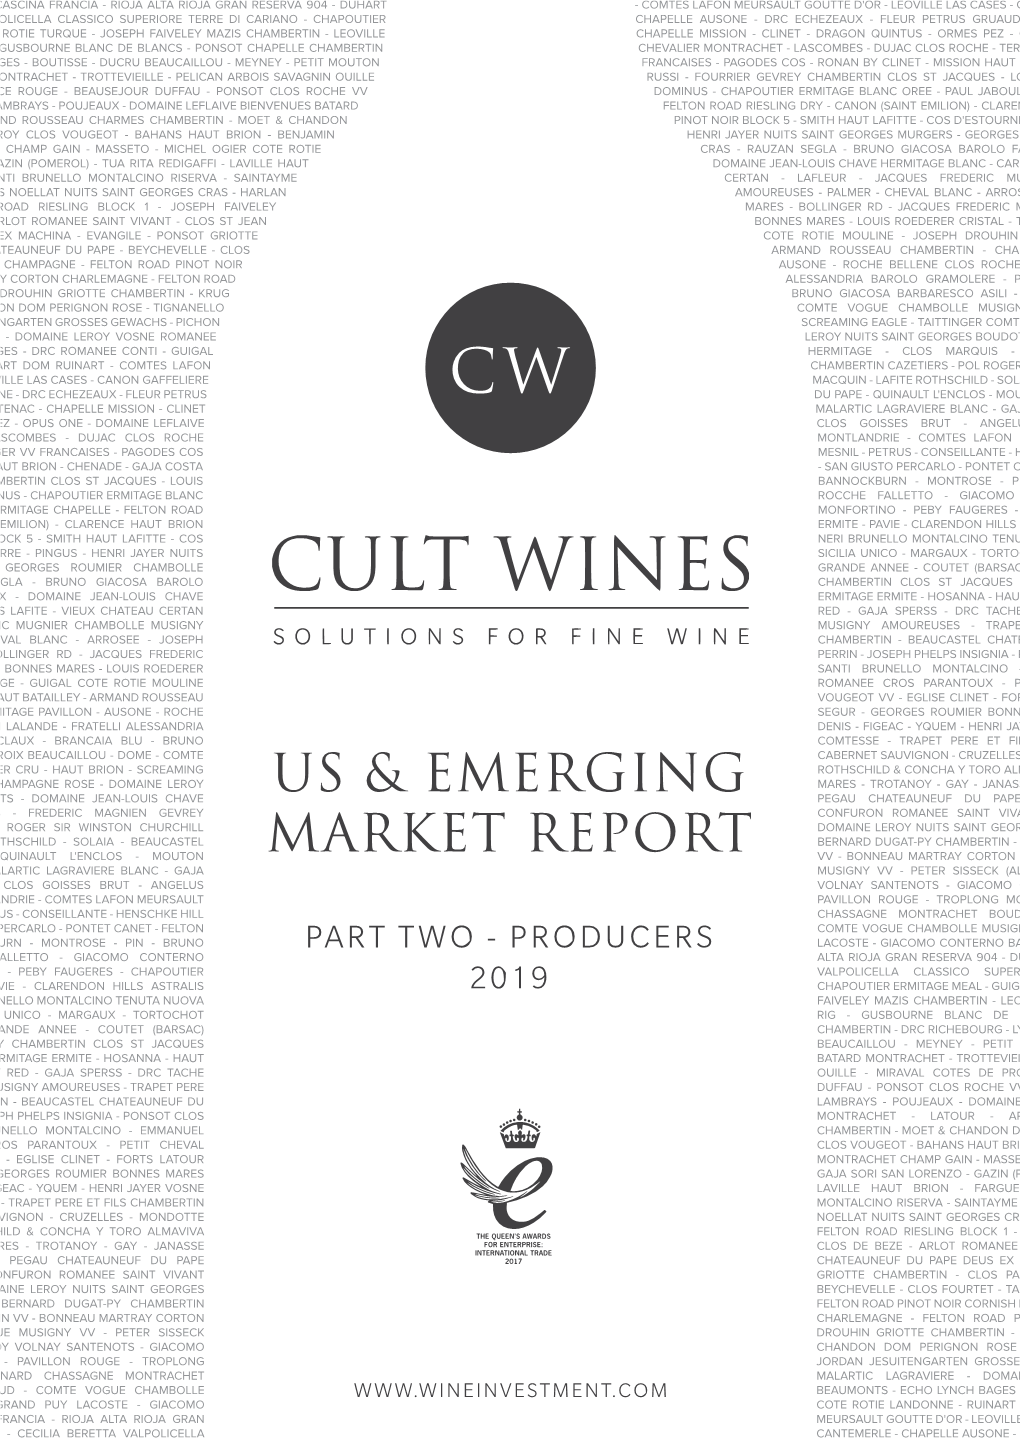 Us & Emerging Market Report